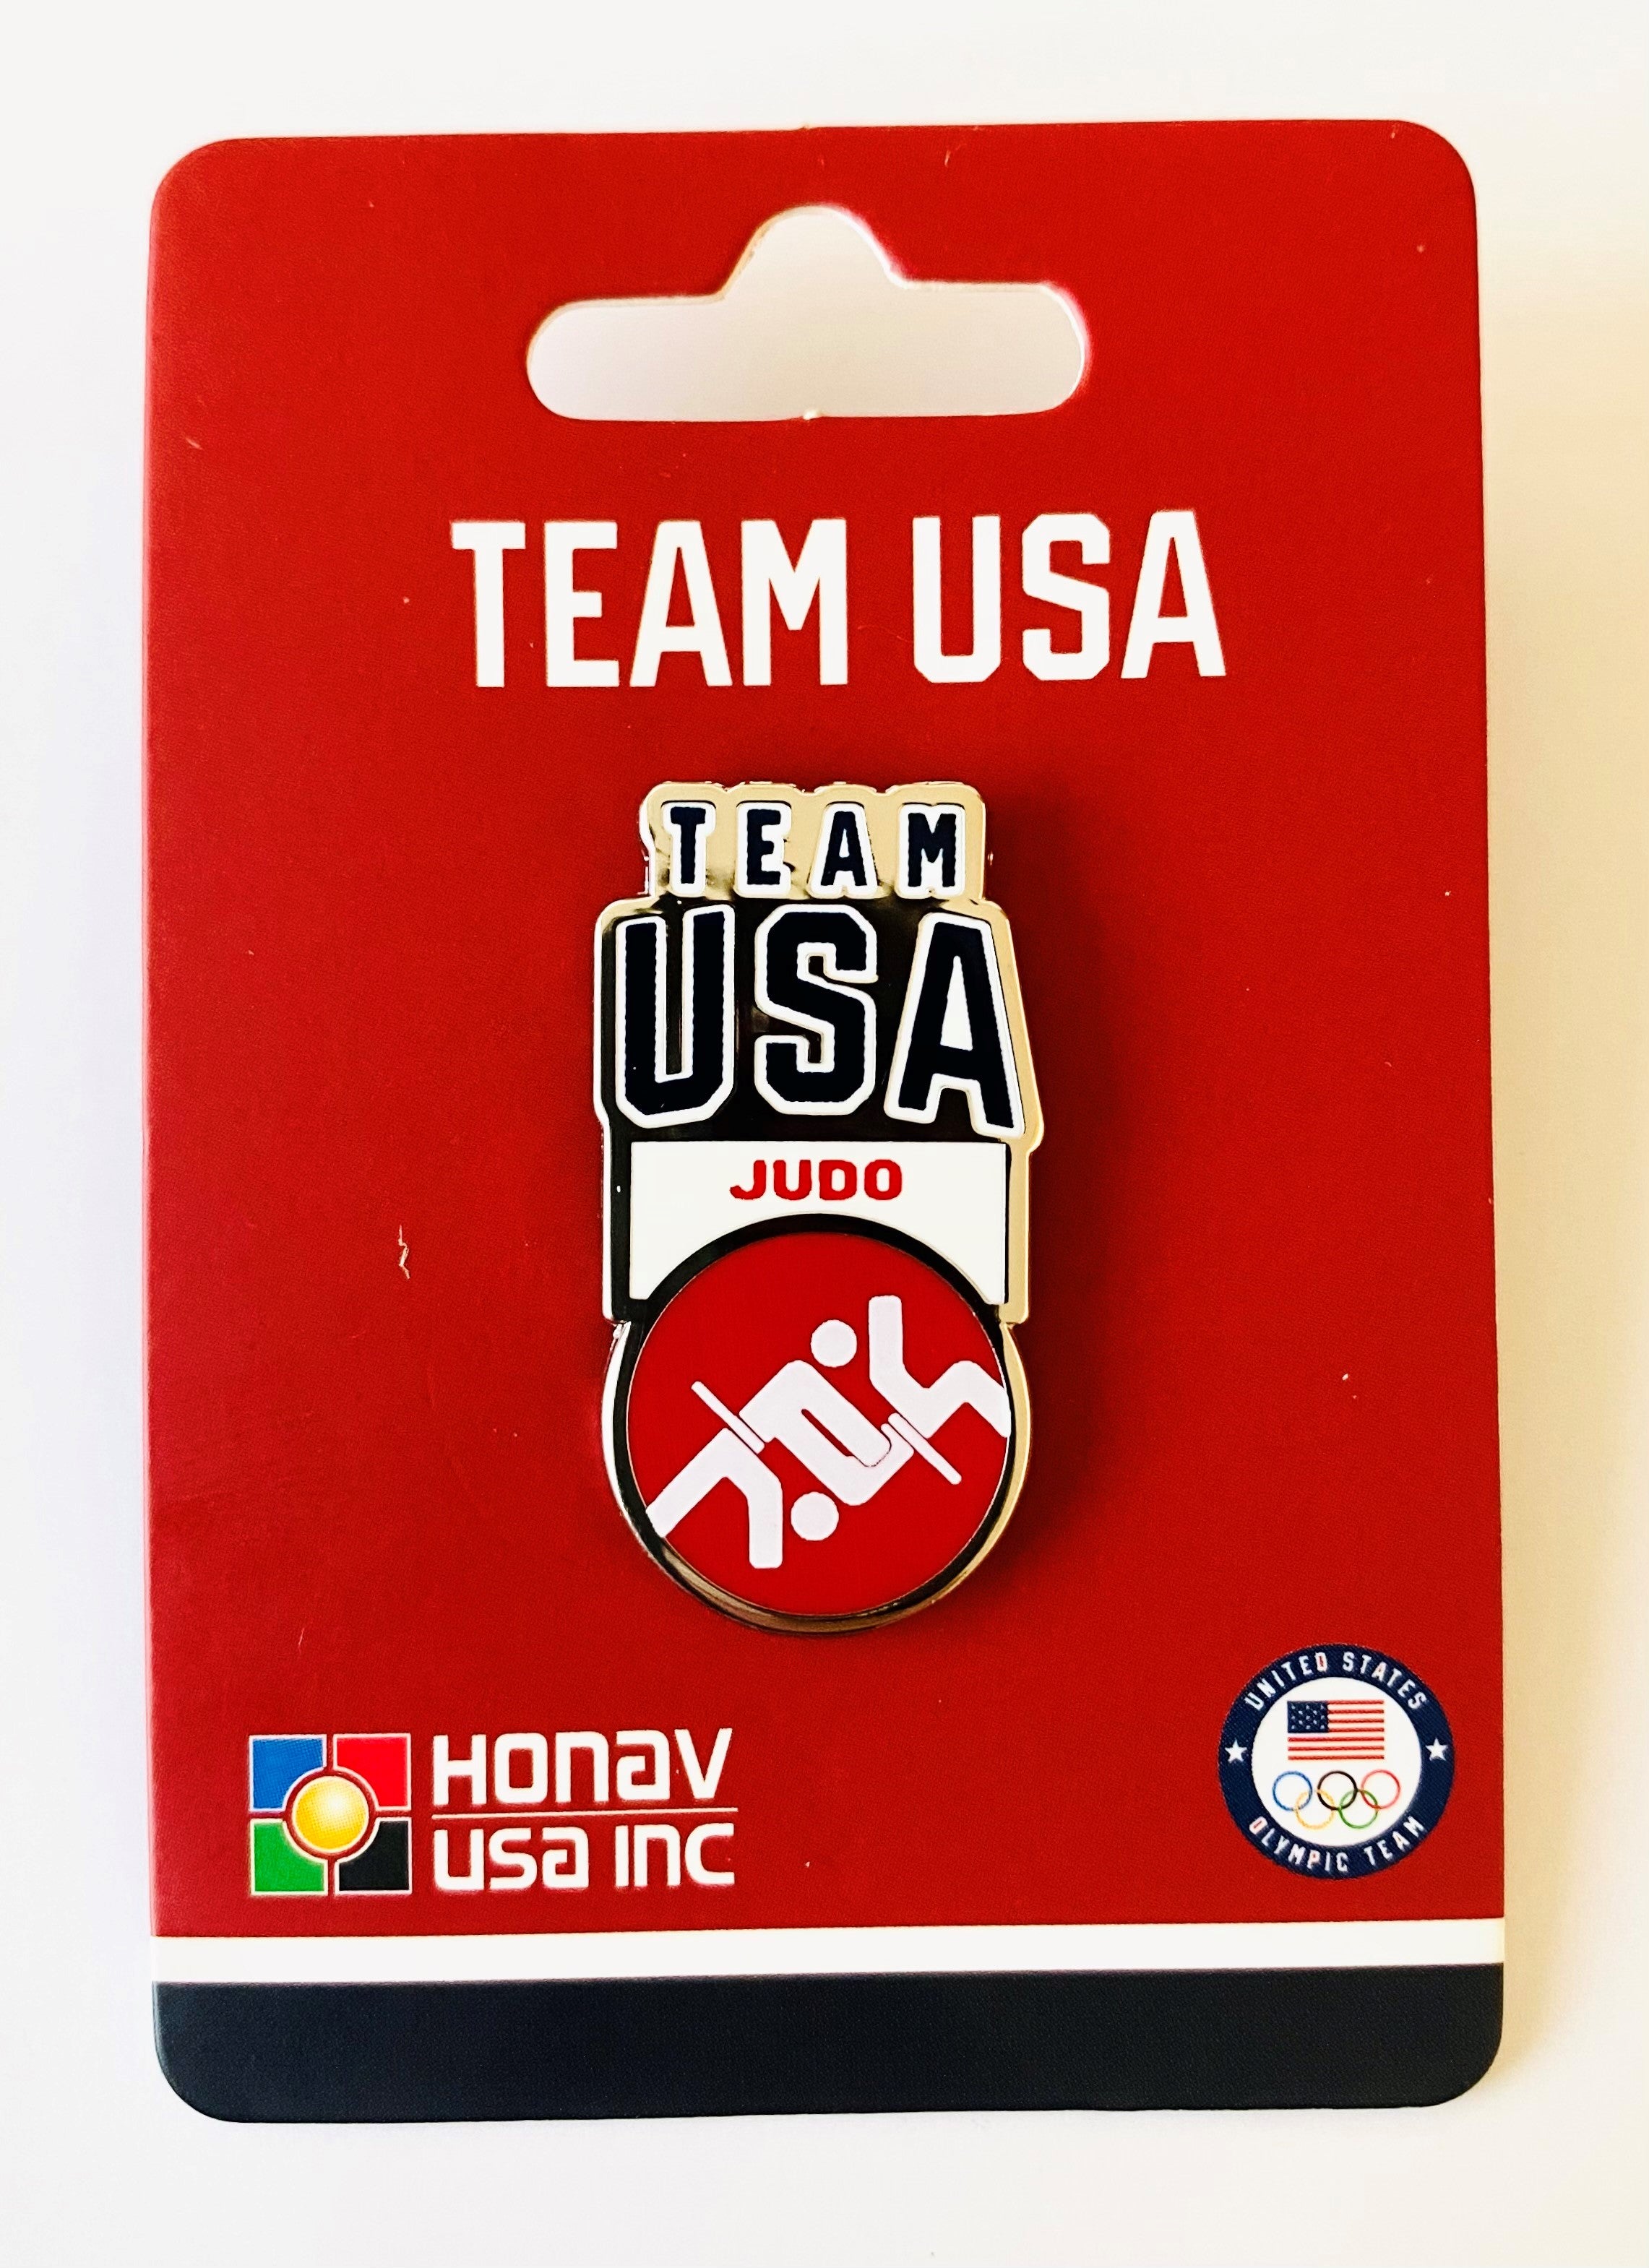 Team USA Judo Pictogram Pin